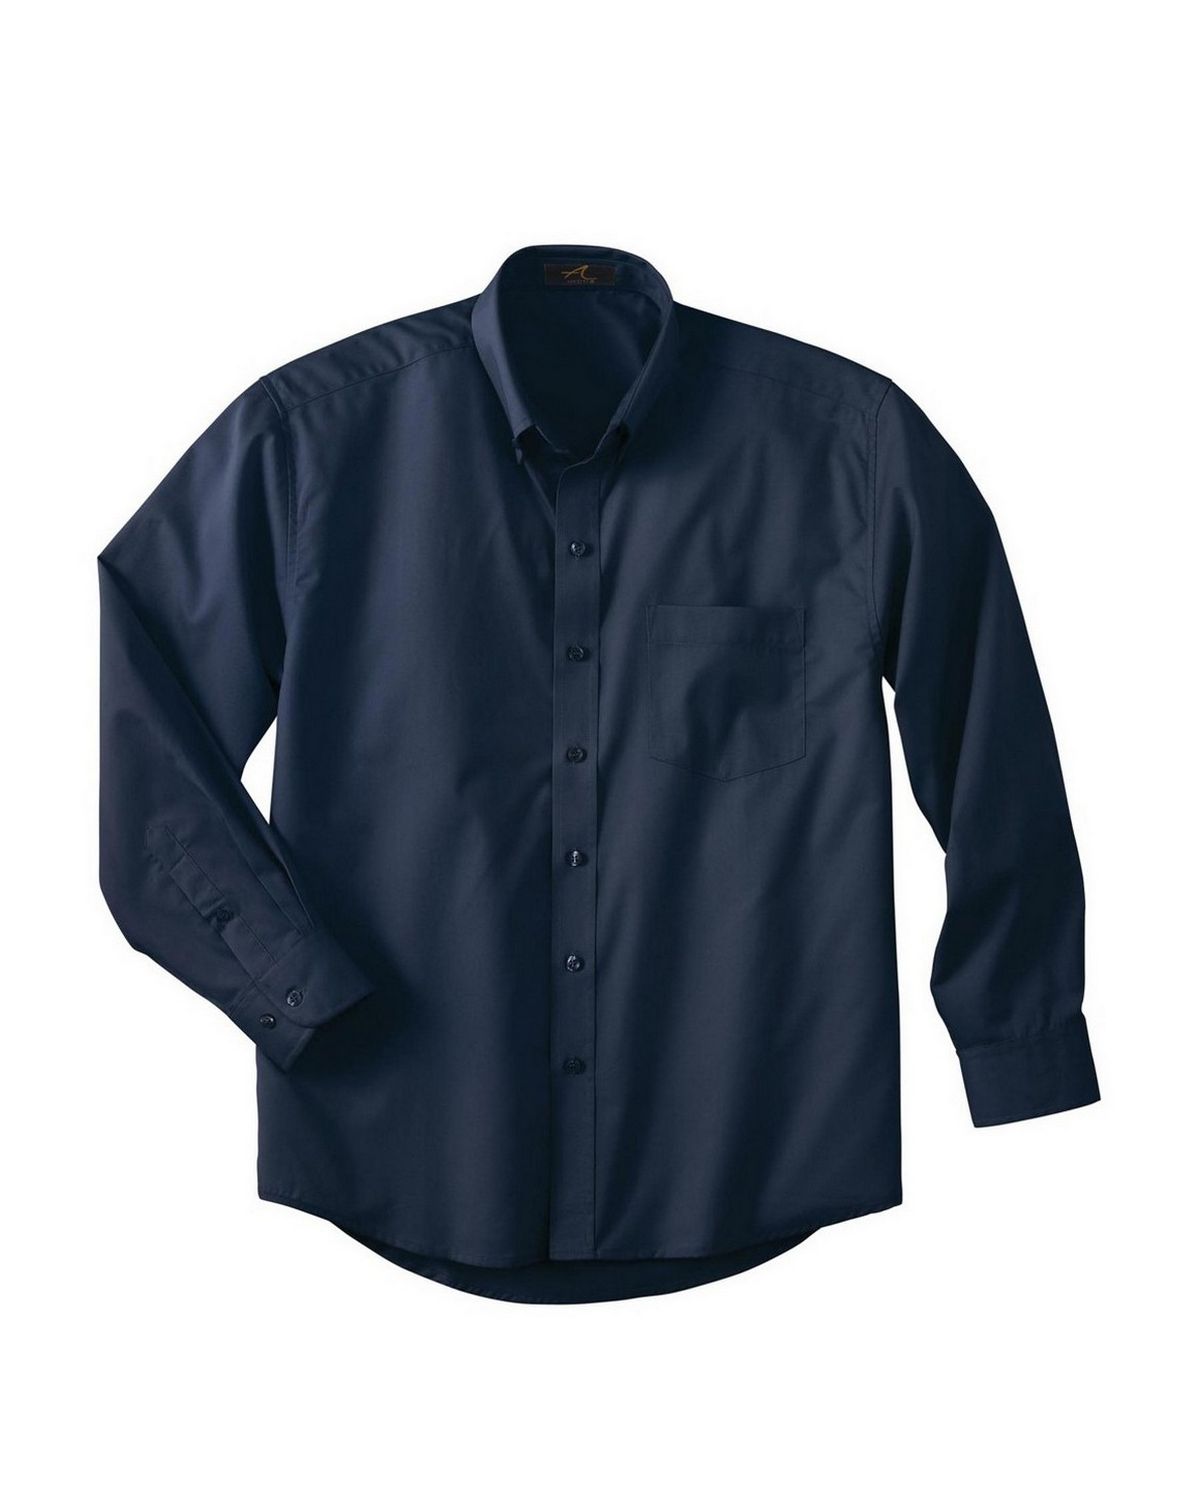 Ash City 87015 Men's Long Sleeve Twill Shirt